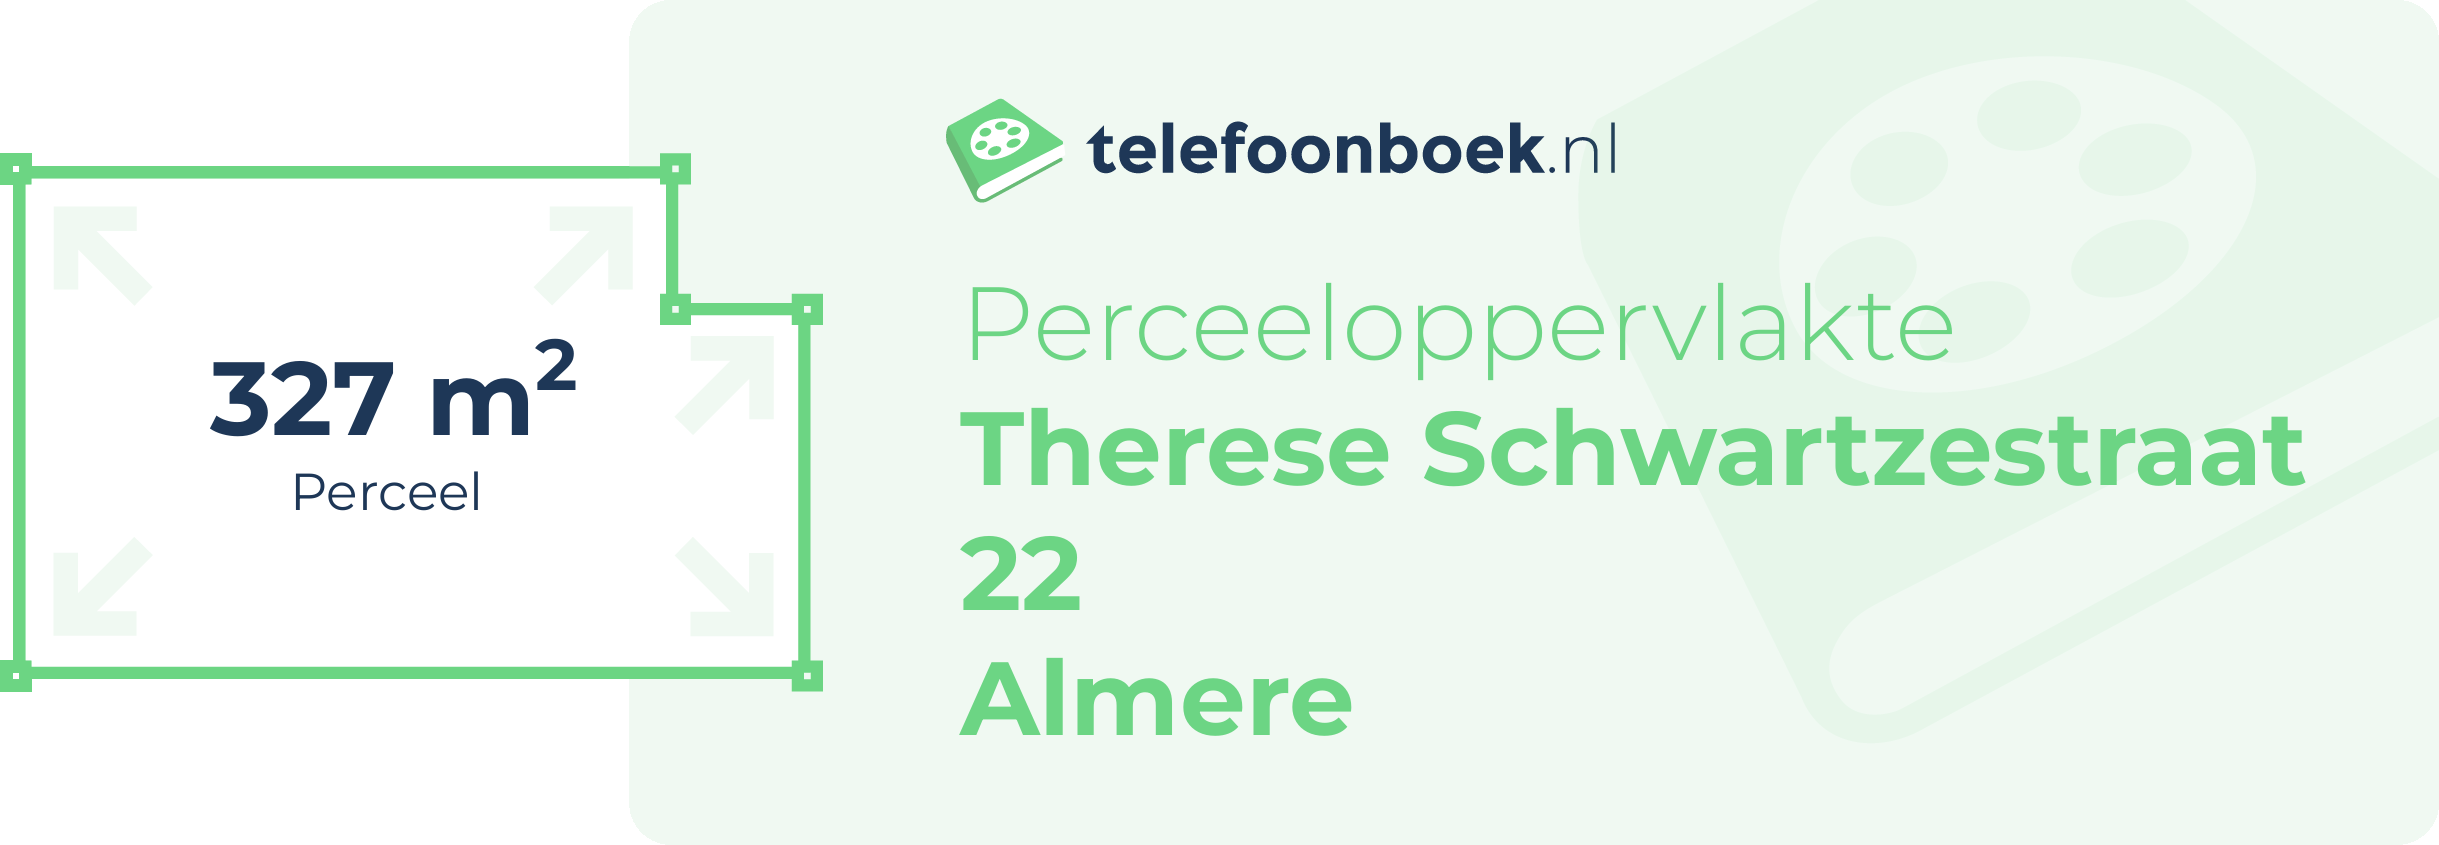 Perceeloppervlakte Therese Schwartzestraat 22 Almere